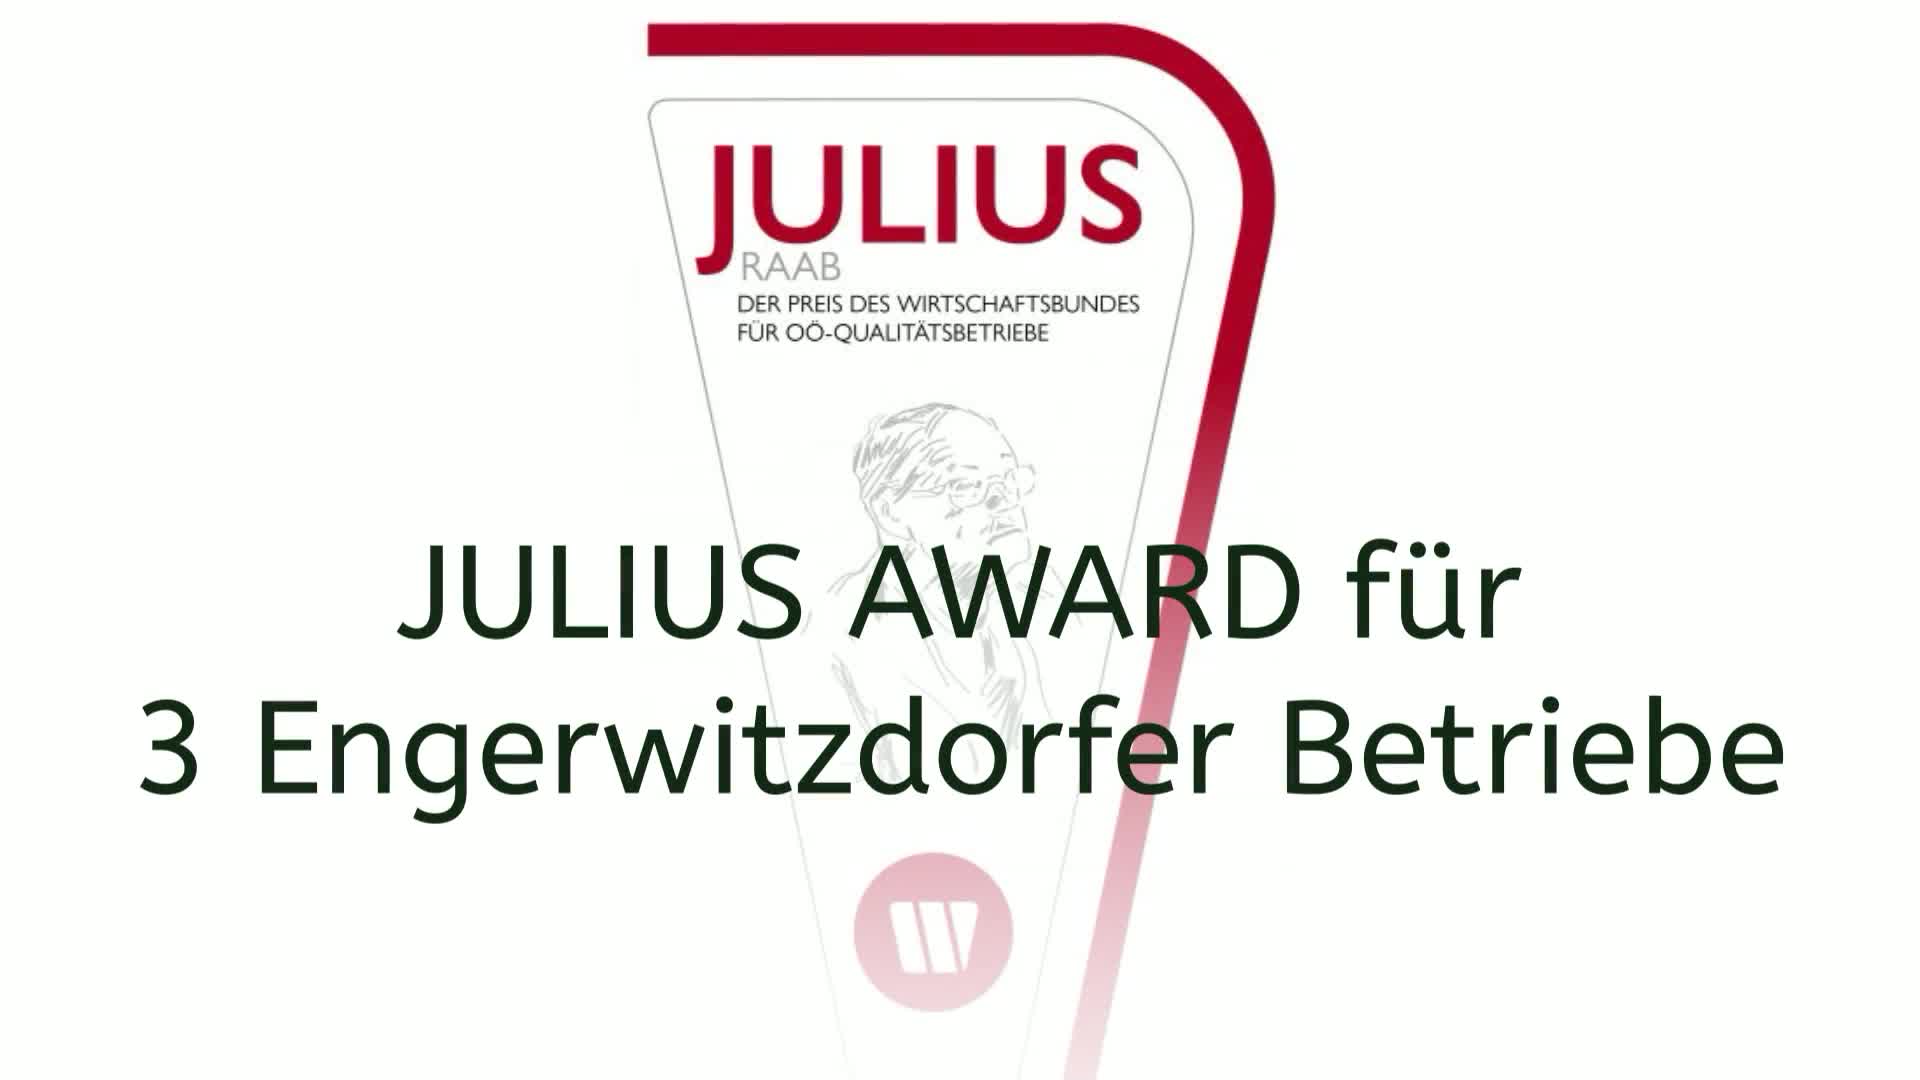 JULIUS AWARD